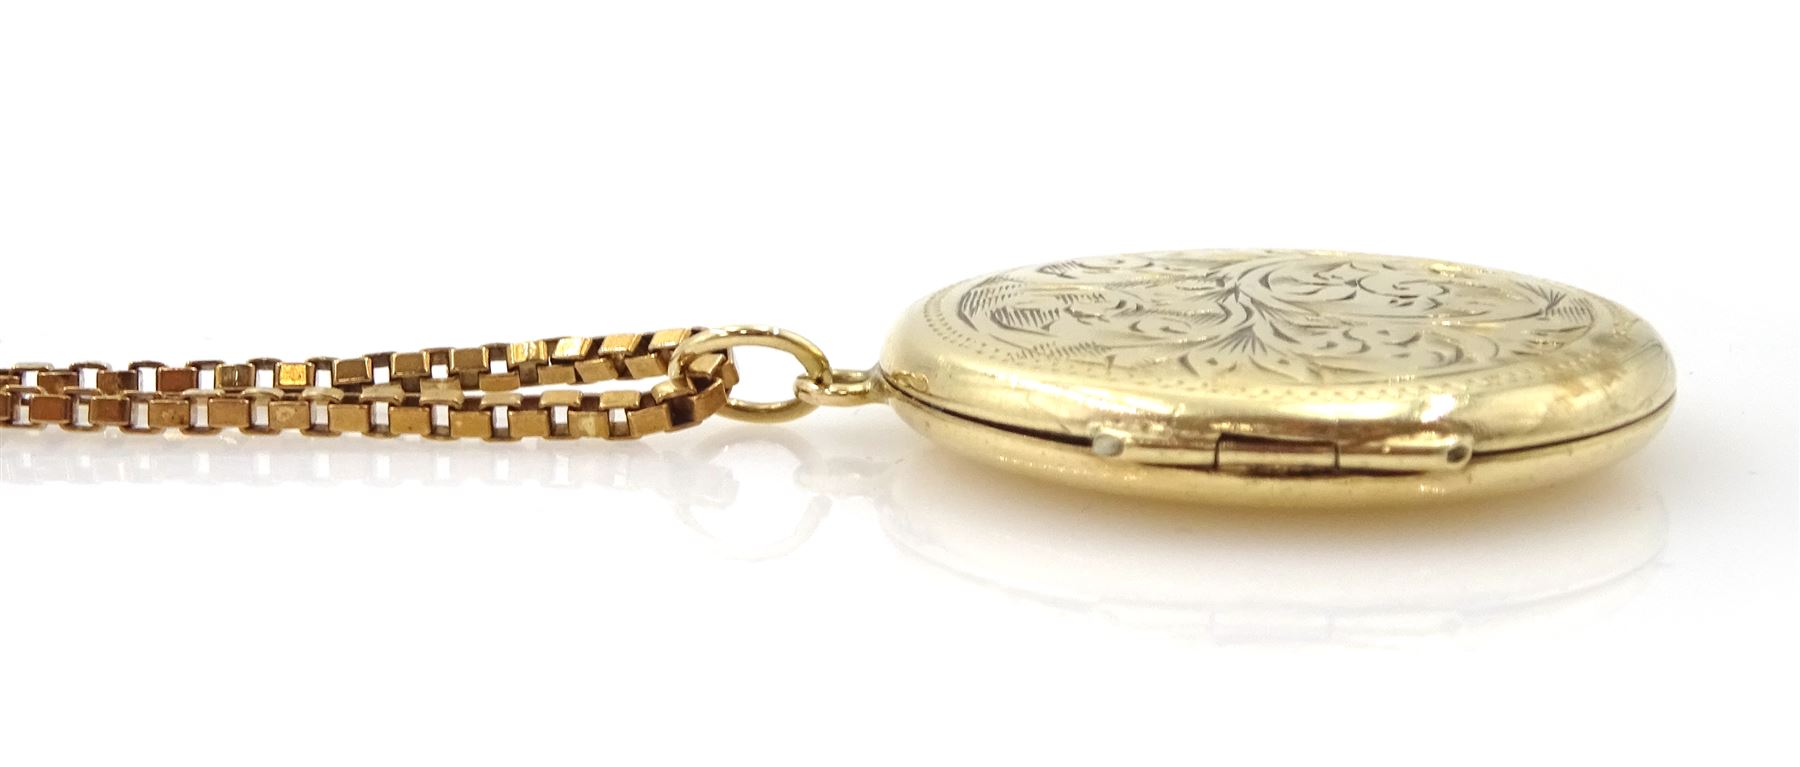 9ct gold round locket pendant necklace - Image 2 of 3